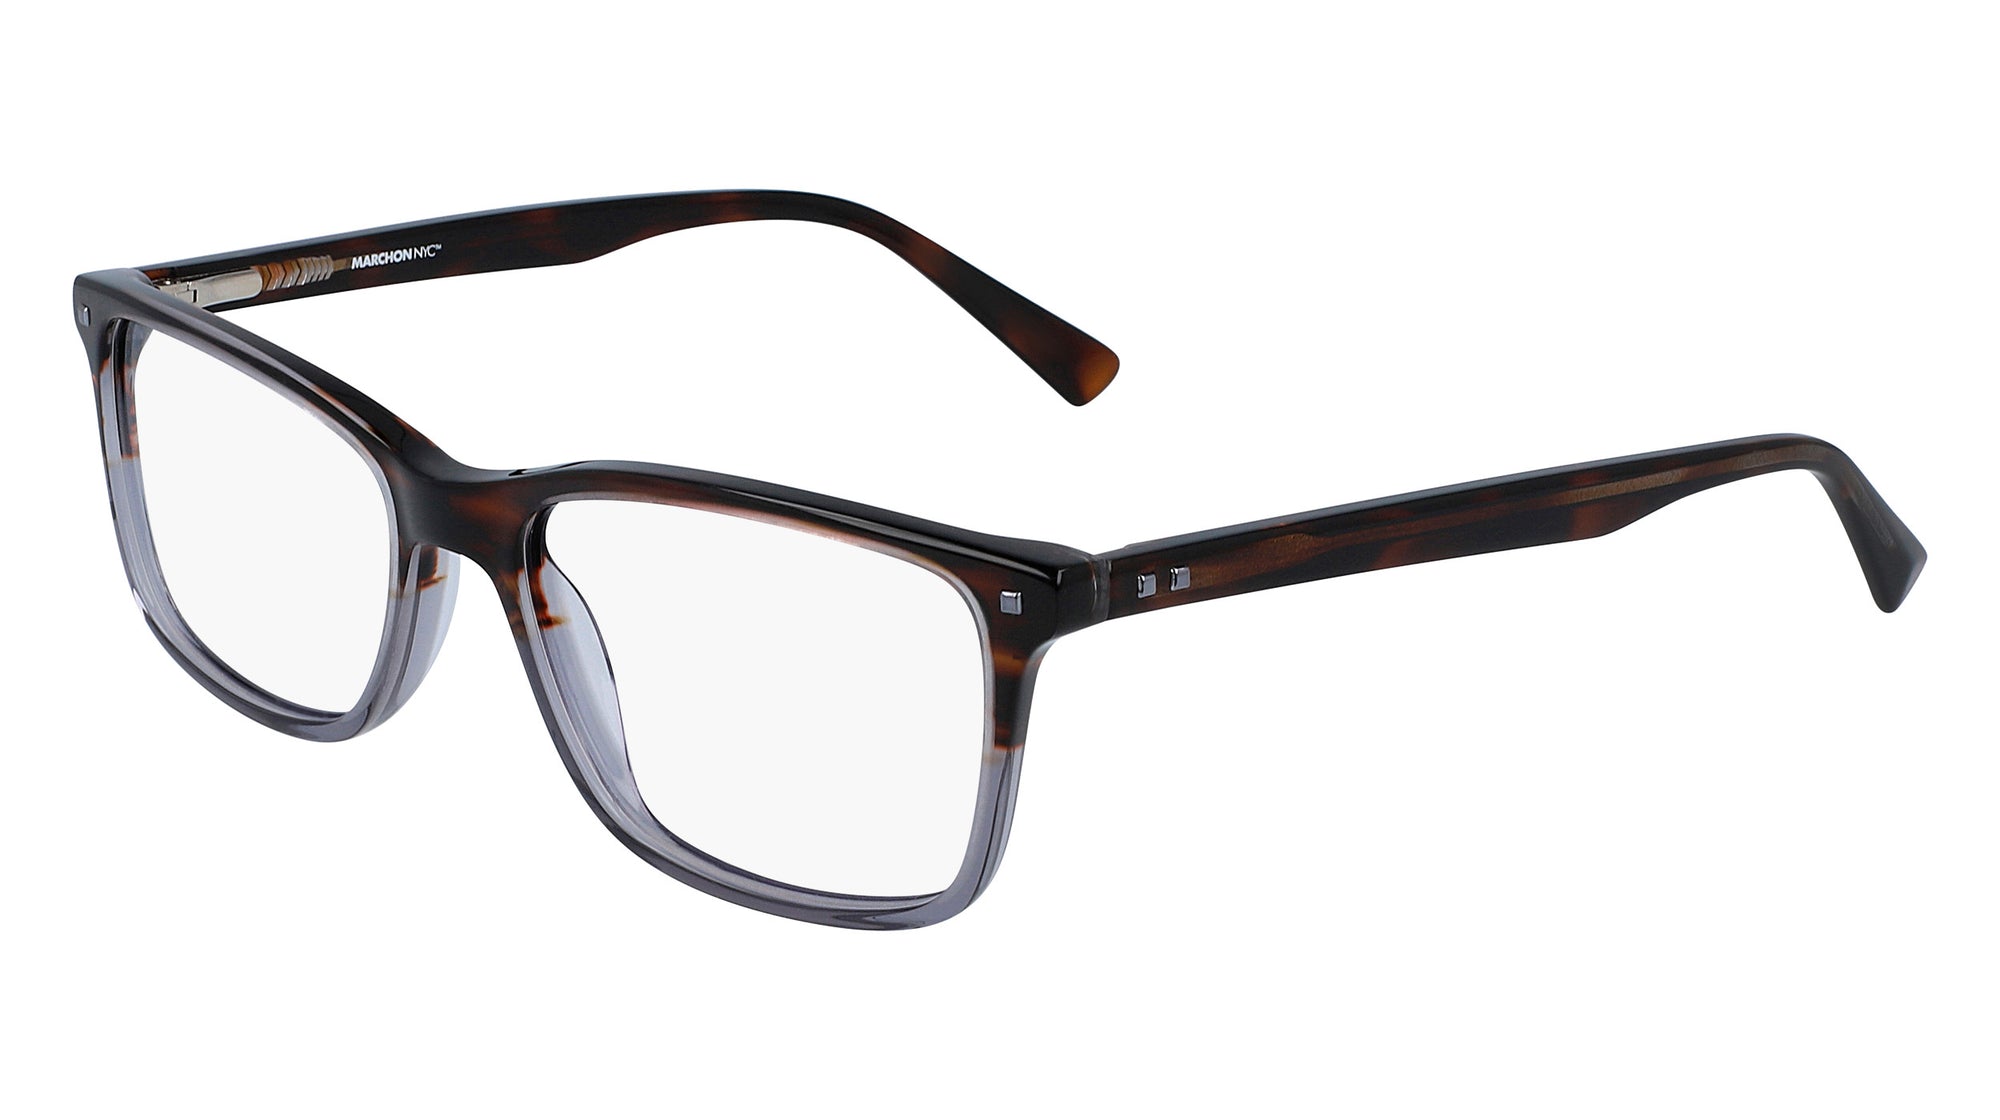 Marchon Eyeglasses M-8501 - Go-Readers.com